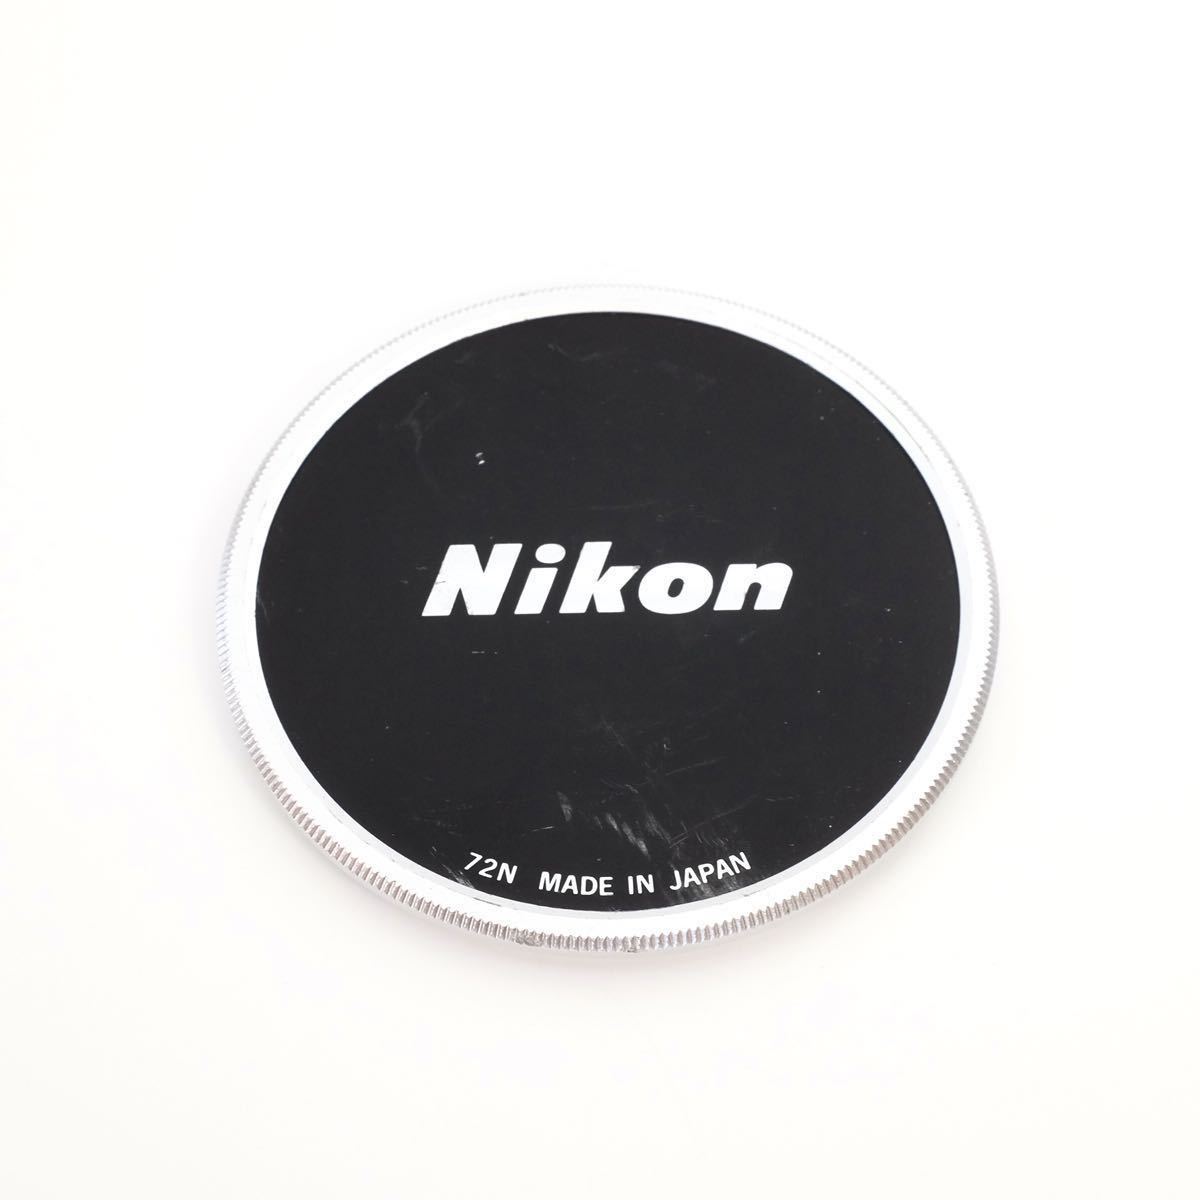 Nikon ニコン 72N レンズキャップ_画像1